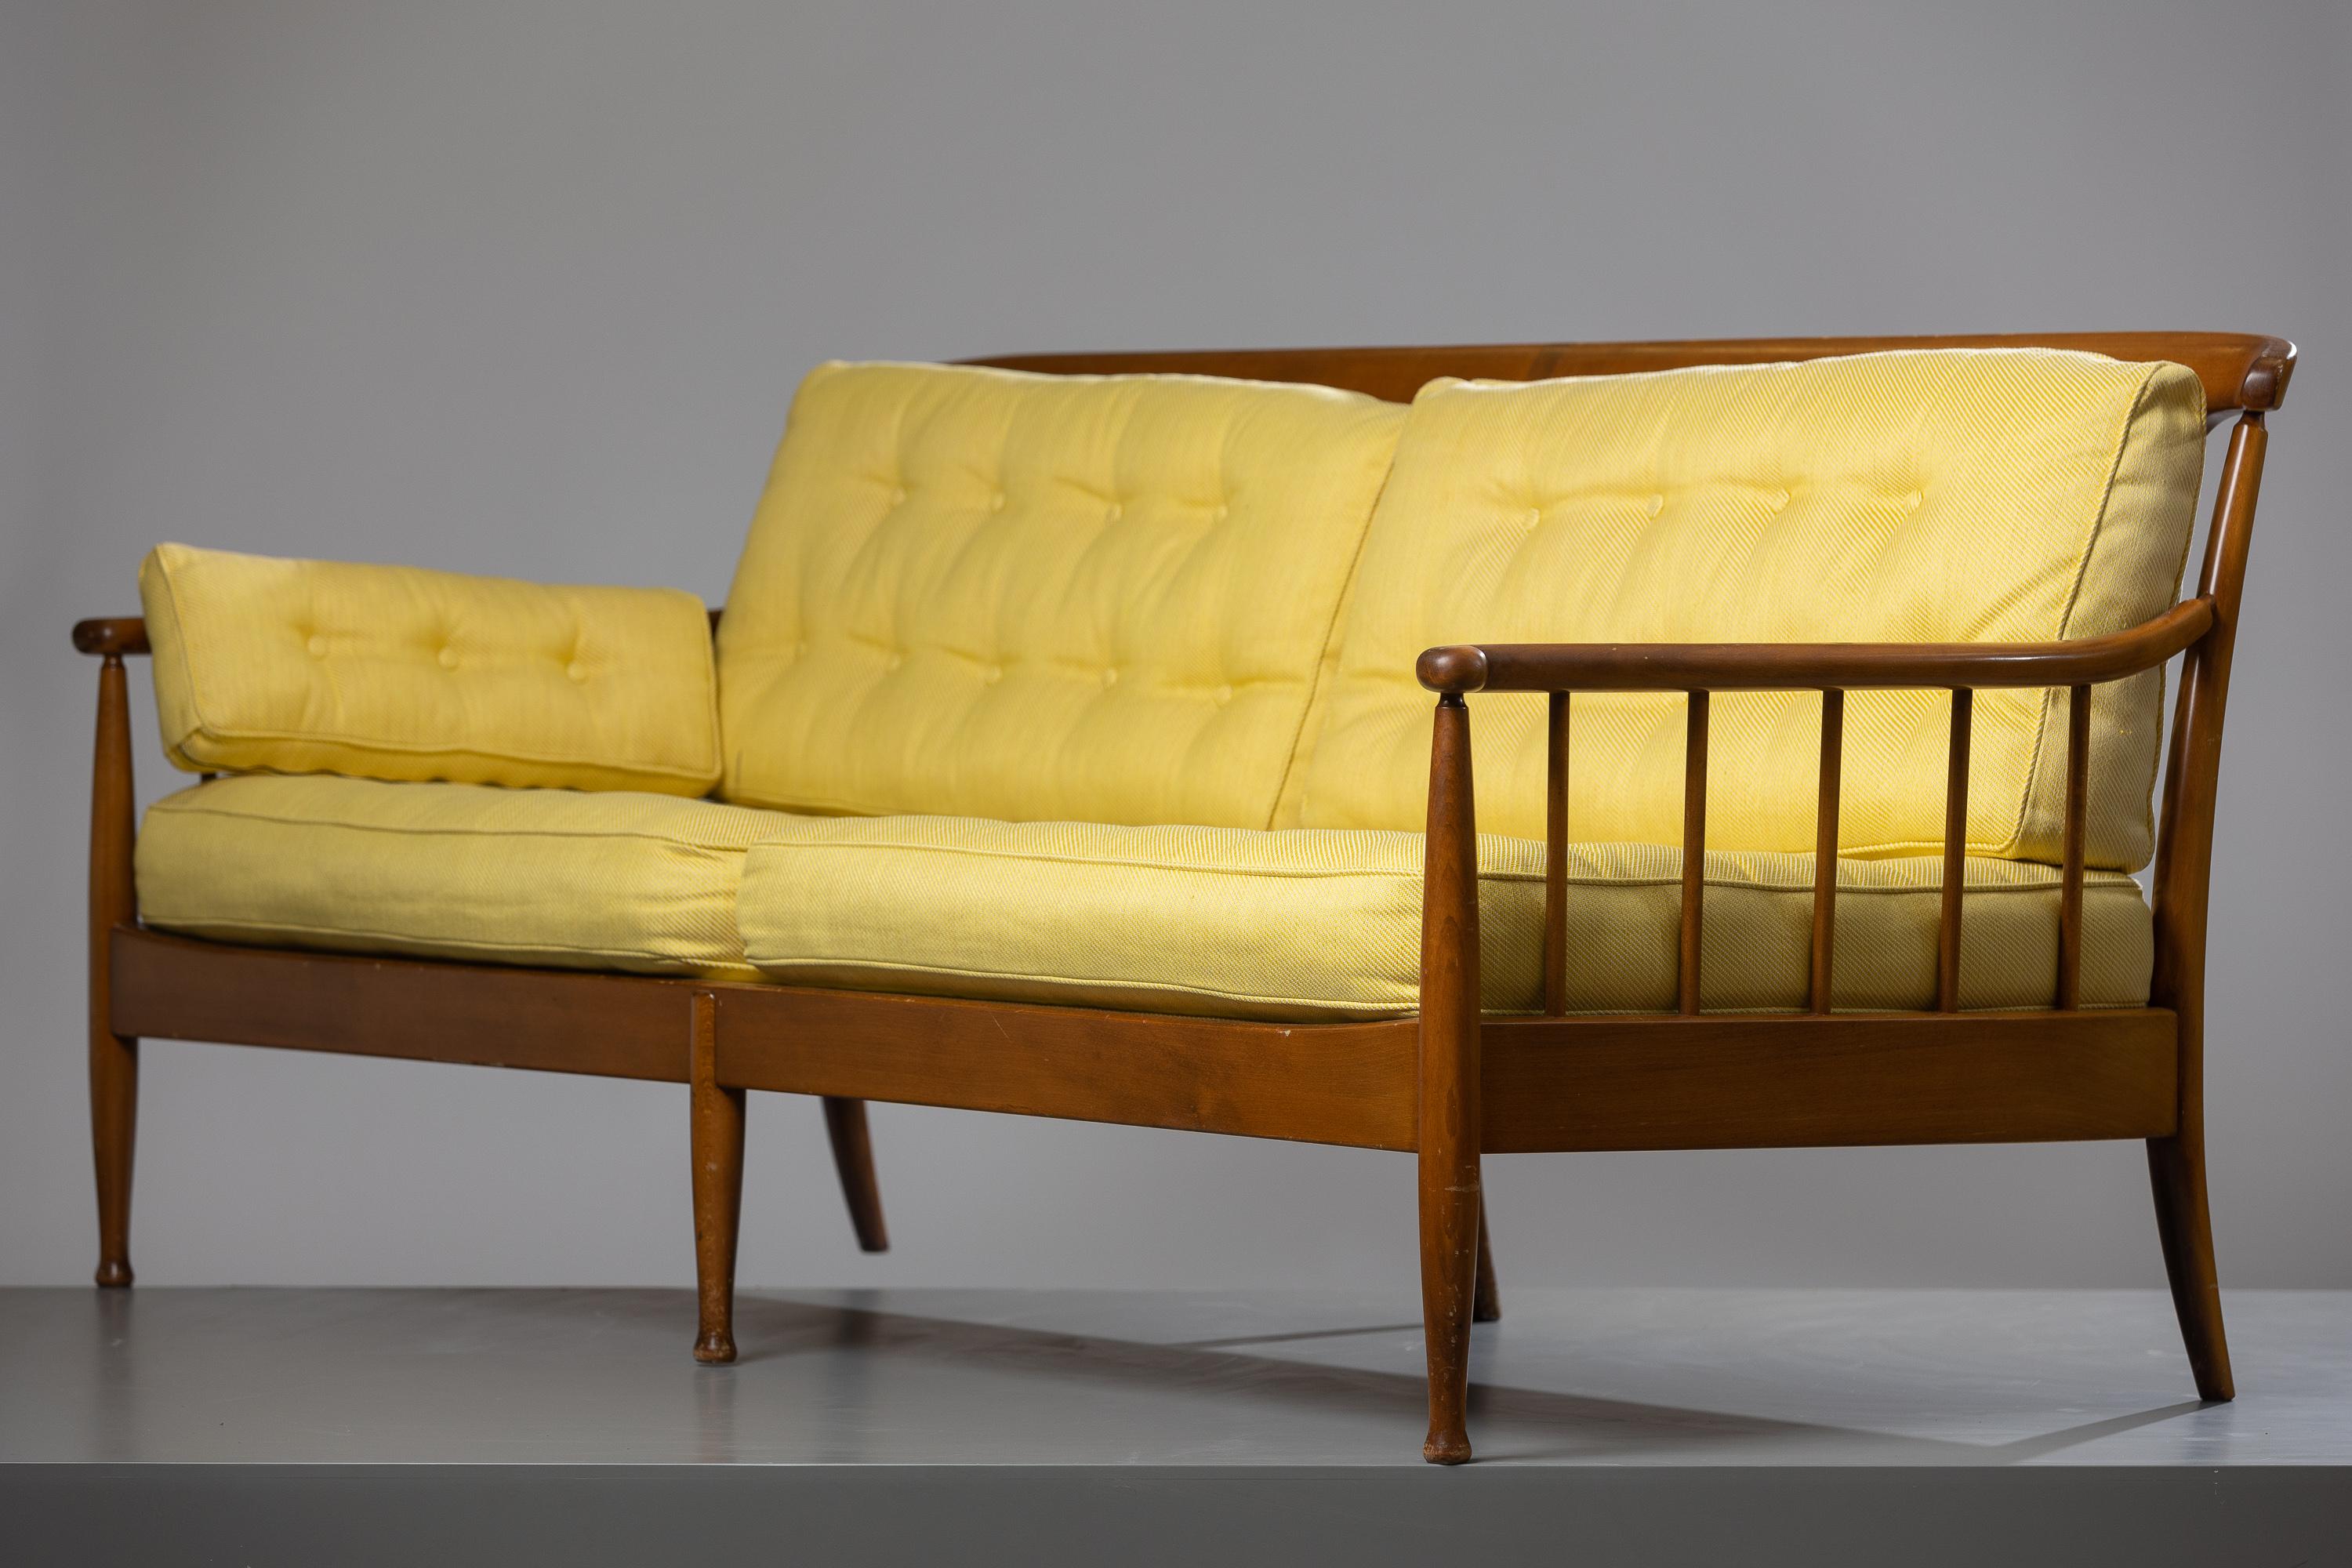 Scandinavian Modern sofa Skrindan by Kerstin Hörling Holmqvist, Material: Walnut In Good Condition For Sale In Skå, SE